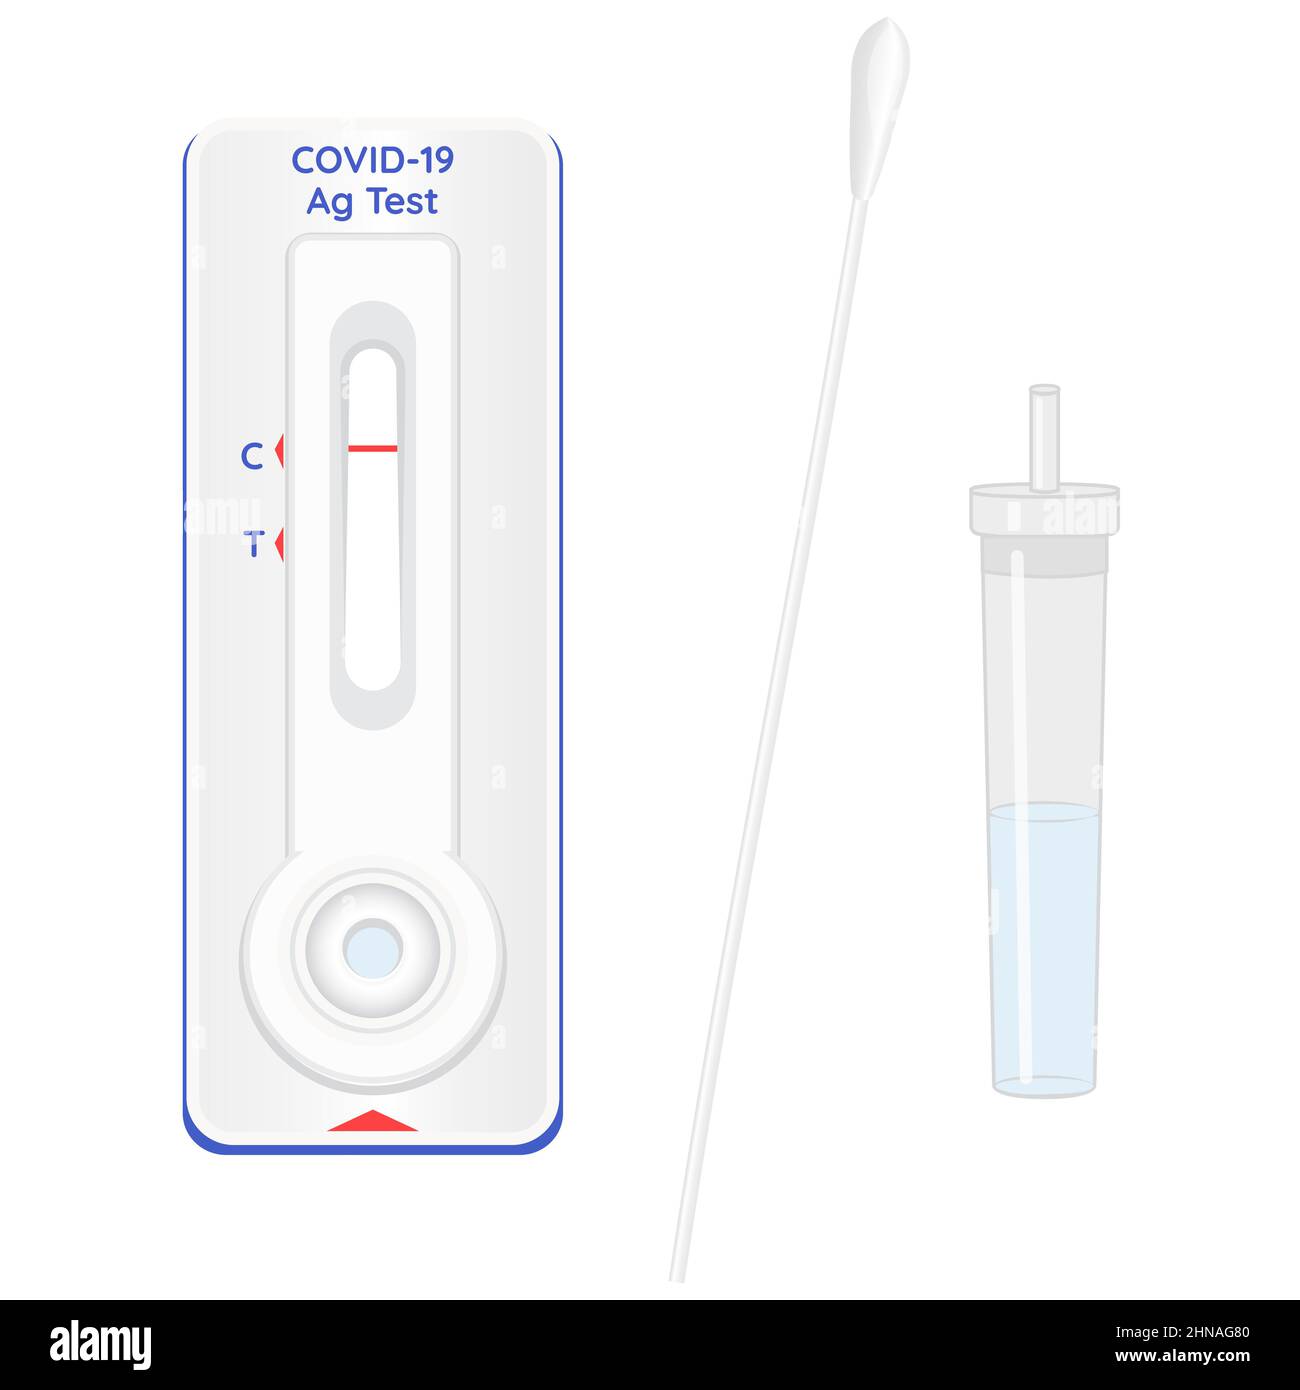 Covid-19 Rapid Antigen test. Coronavirus swap sample in lysis buffer, strip with reagents, result with antigen molecules. Vector illustration. Stock Vector